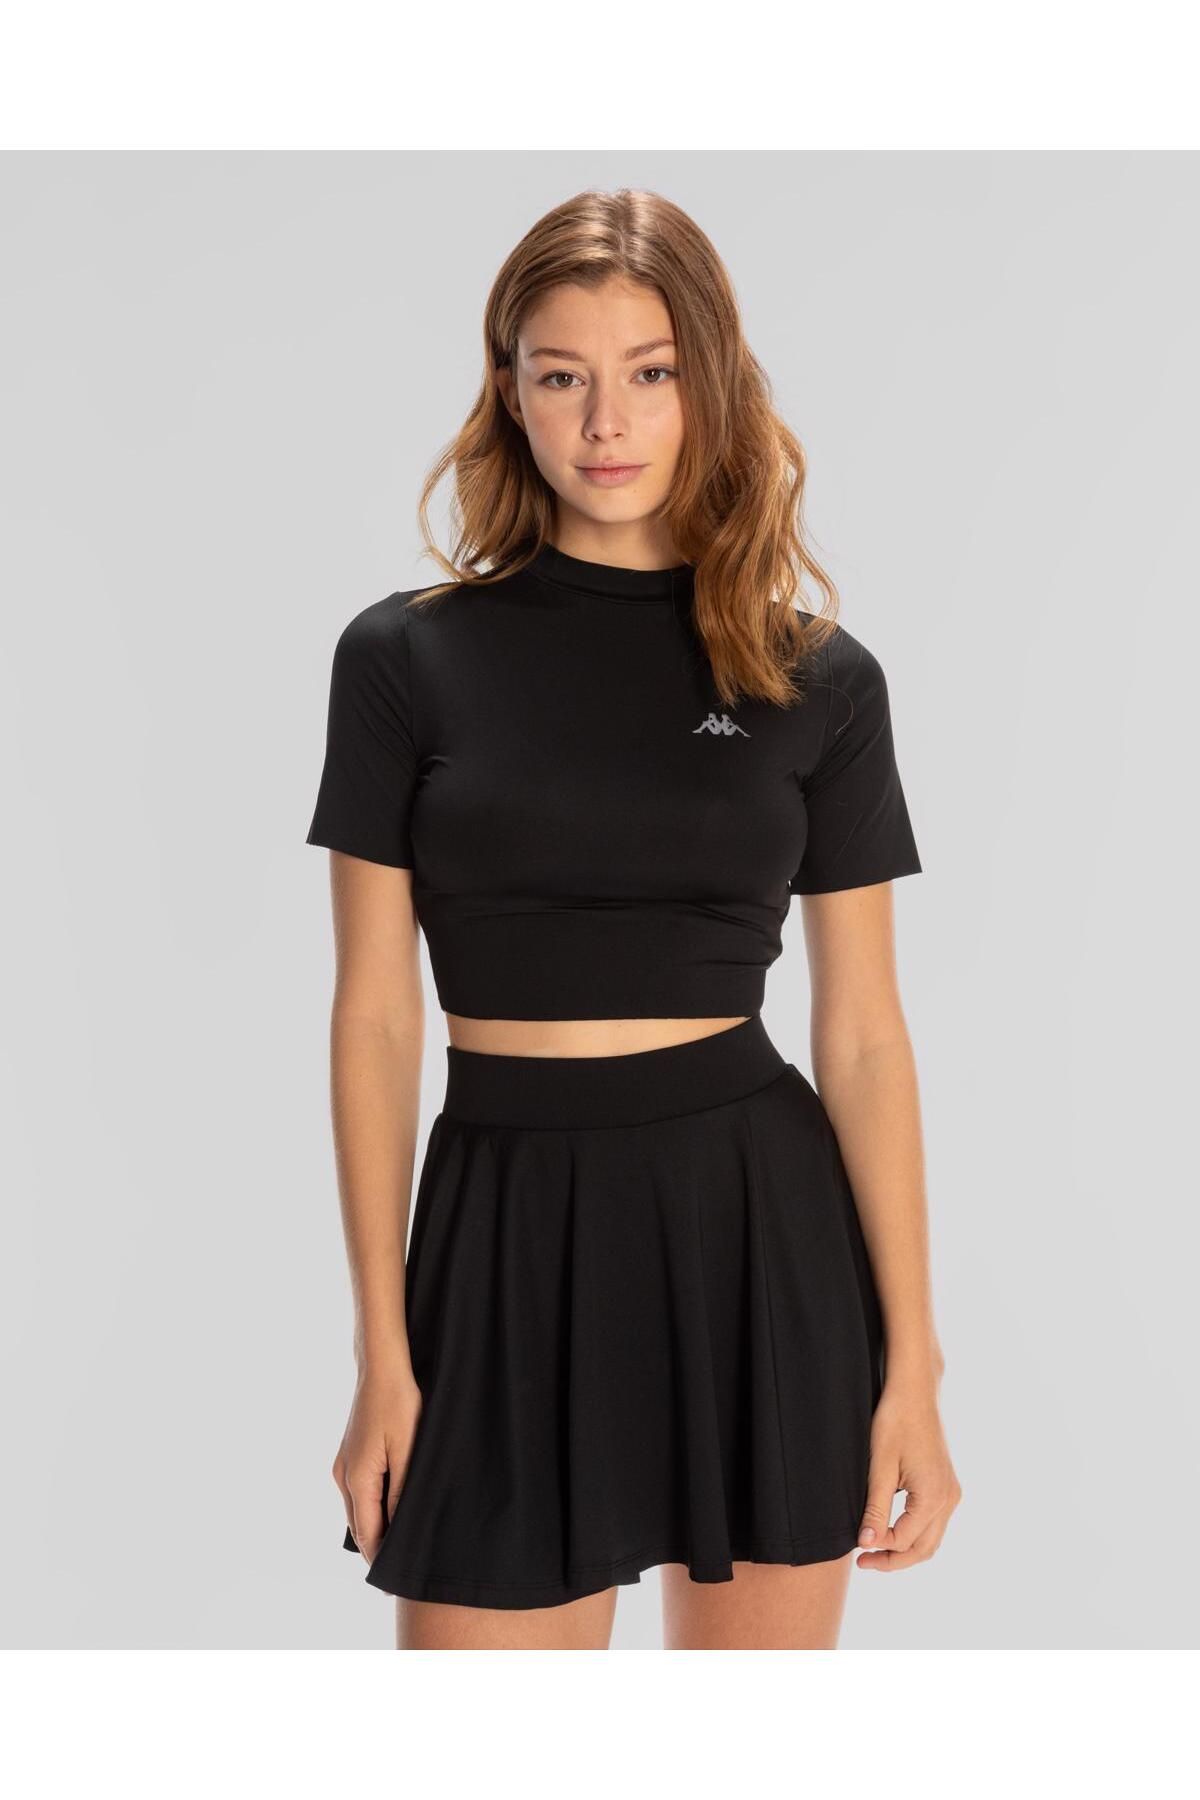 Kappa Fetsu Short Sleeve Kadın Siyah Slim Fit Tişört